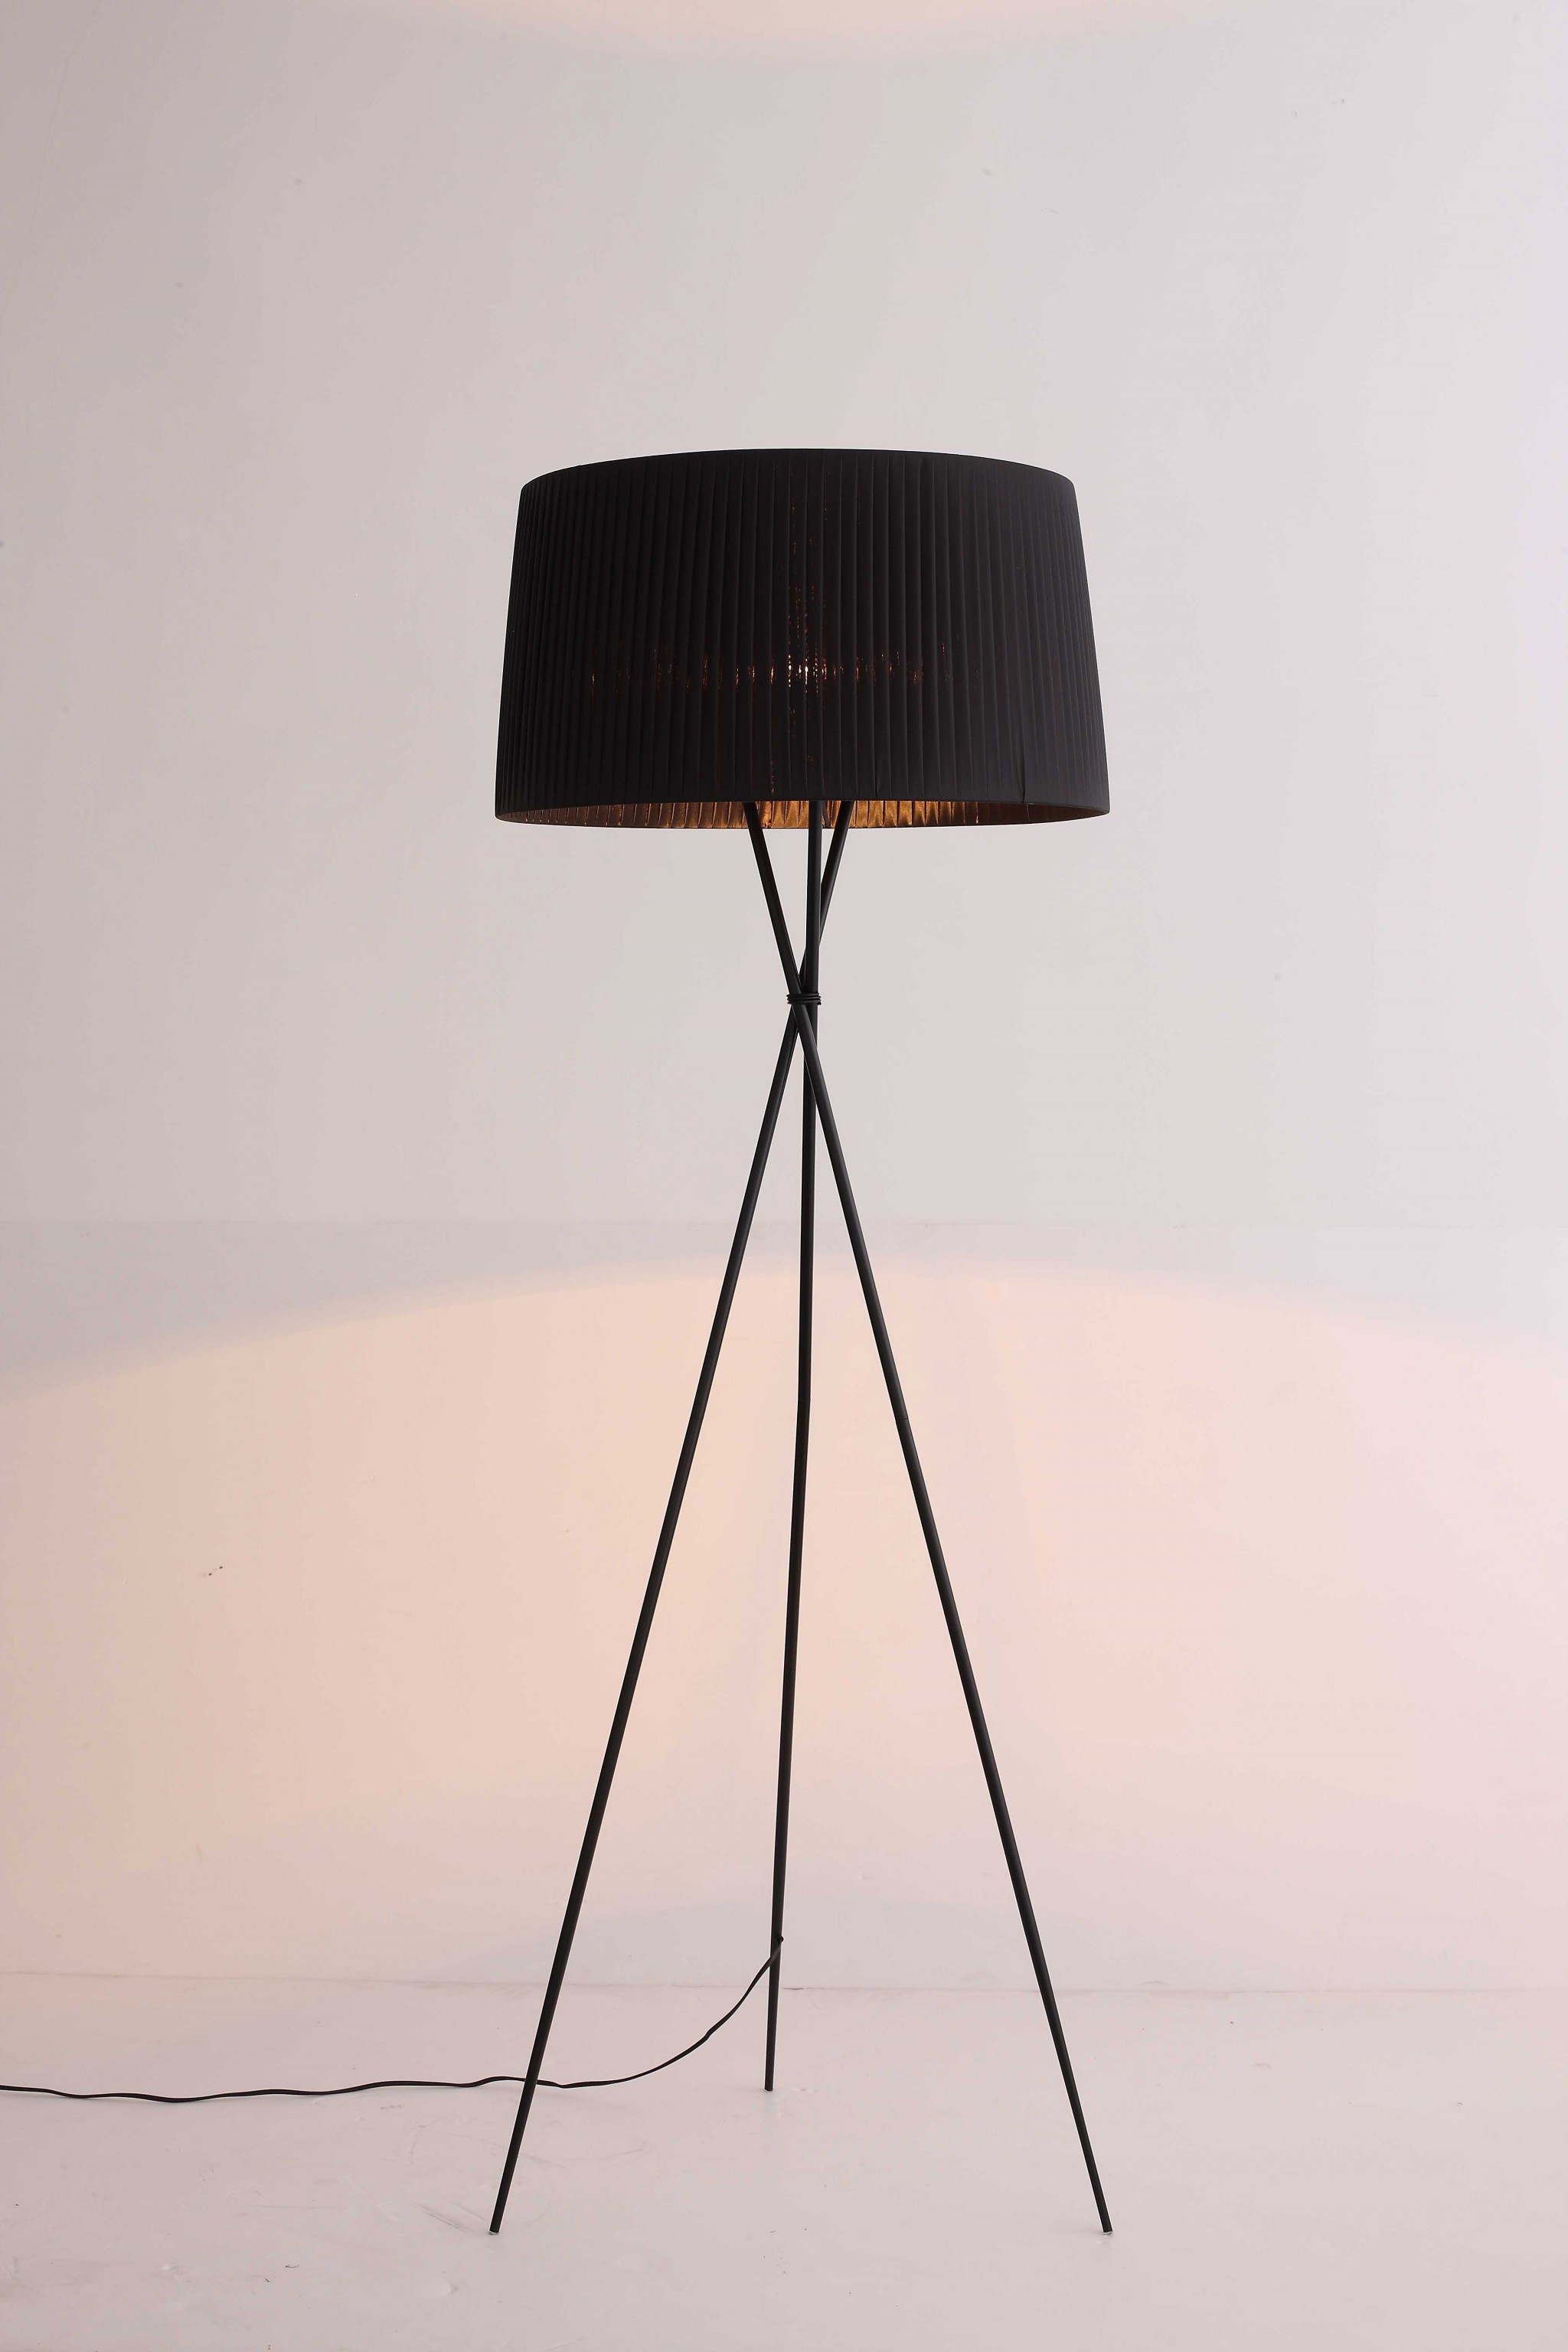 20" X 20" X 69" Black Carbon Floor Lamp